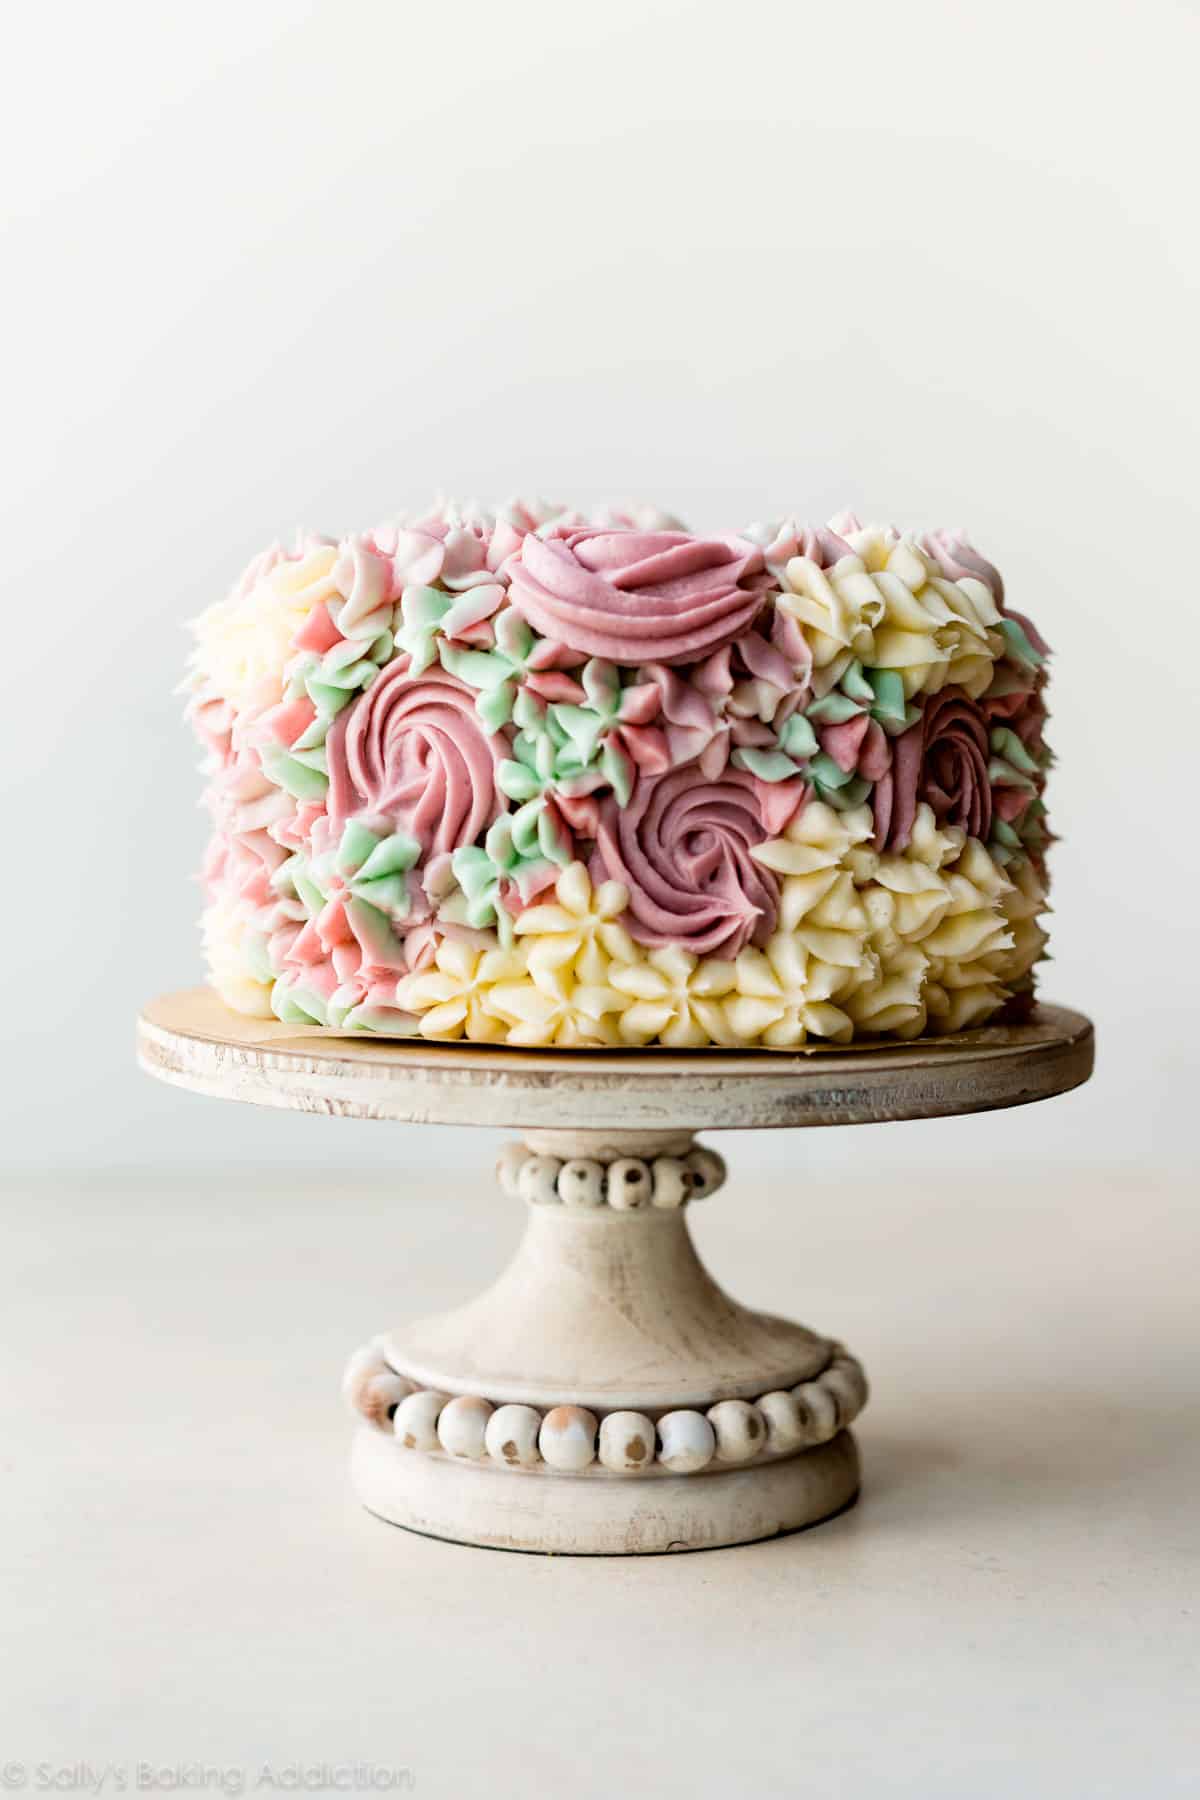 6 Inch Birthday Cake + Decorating Video Sally's Baking